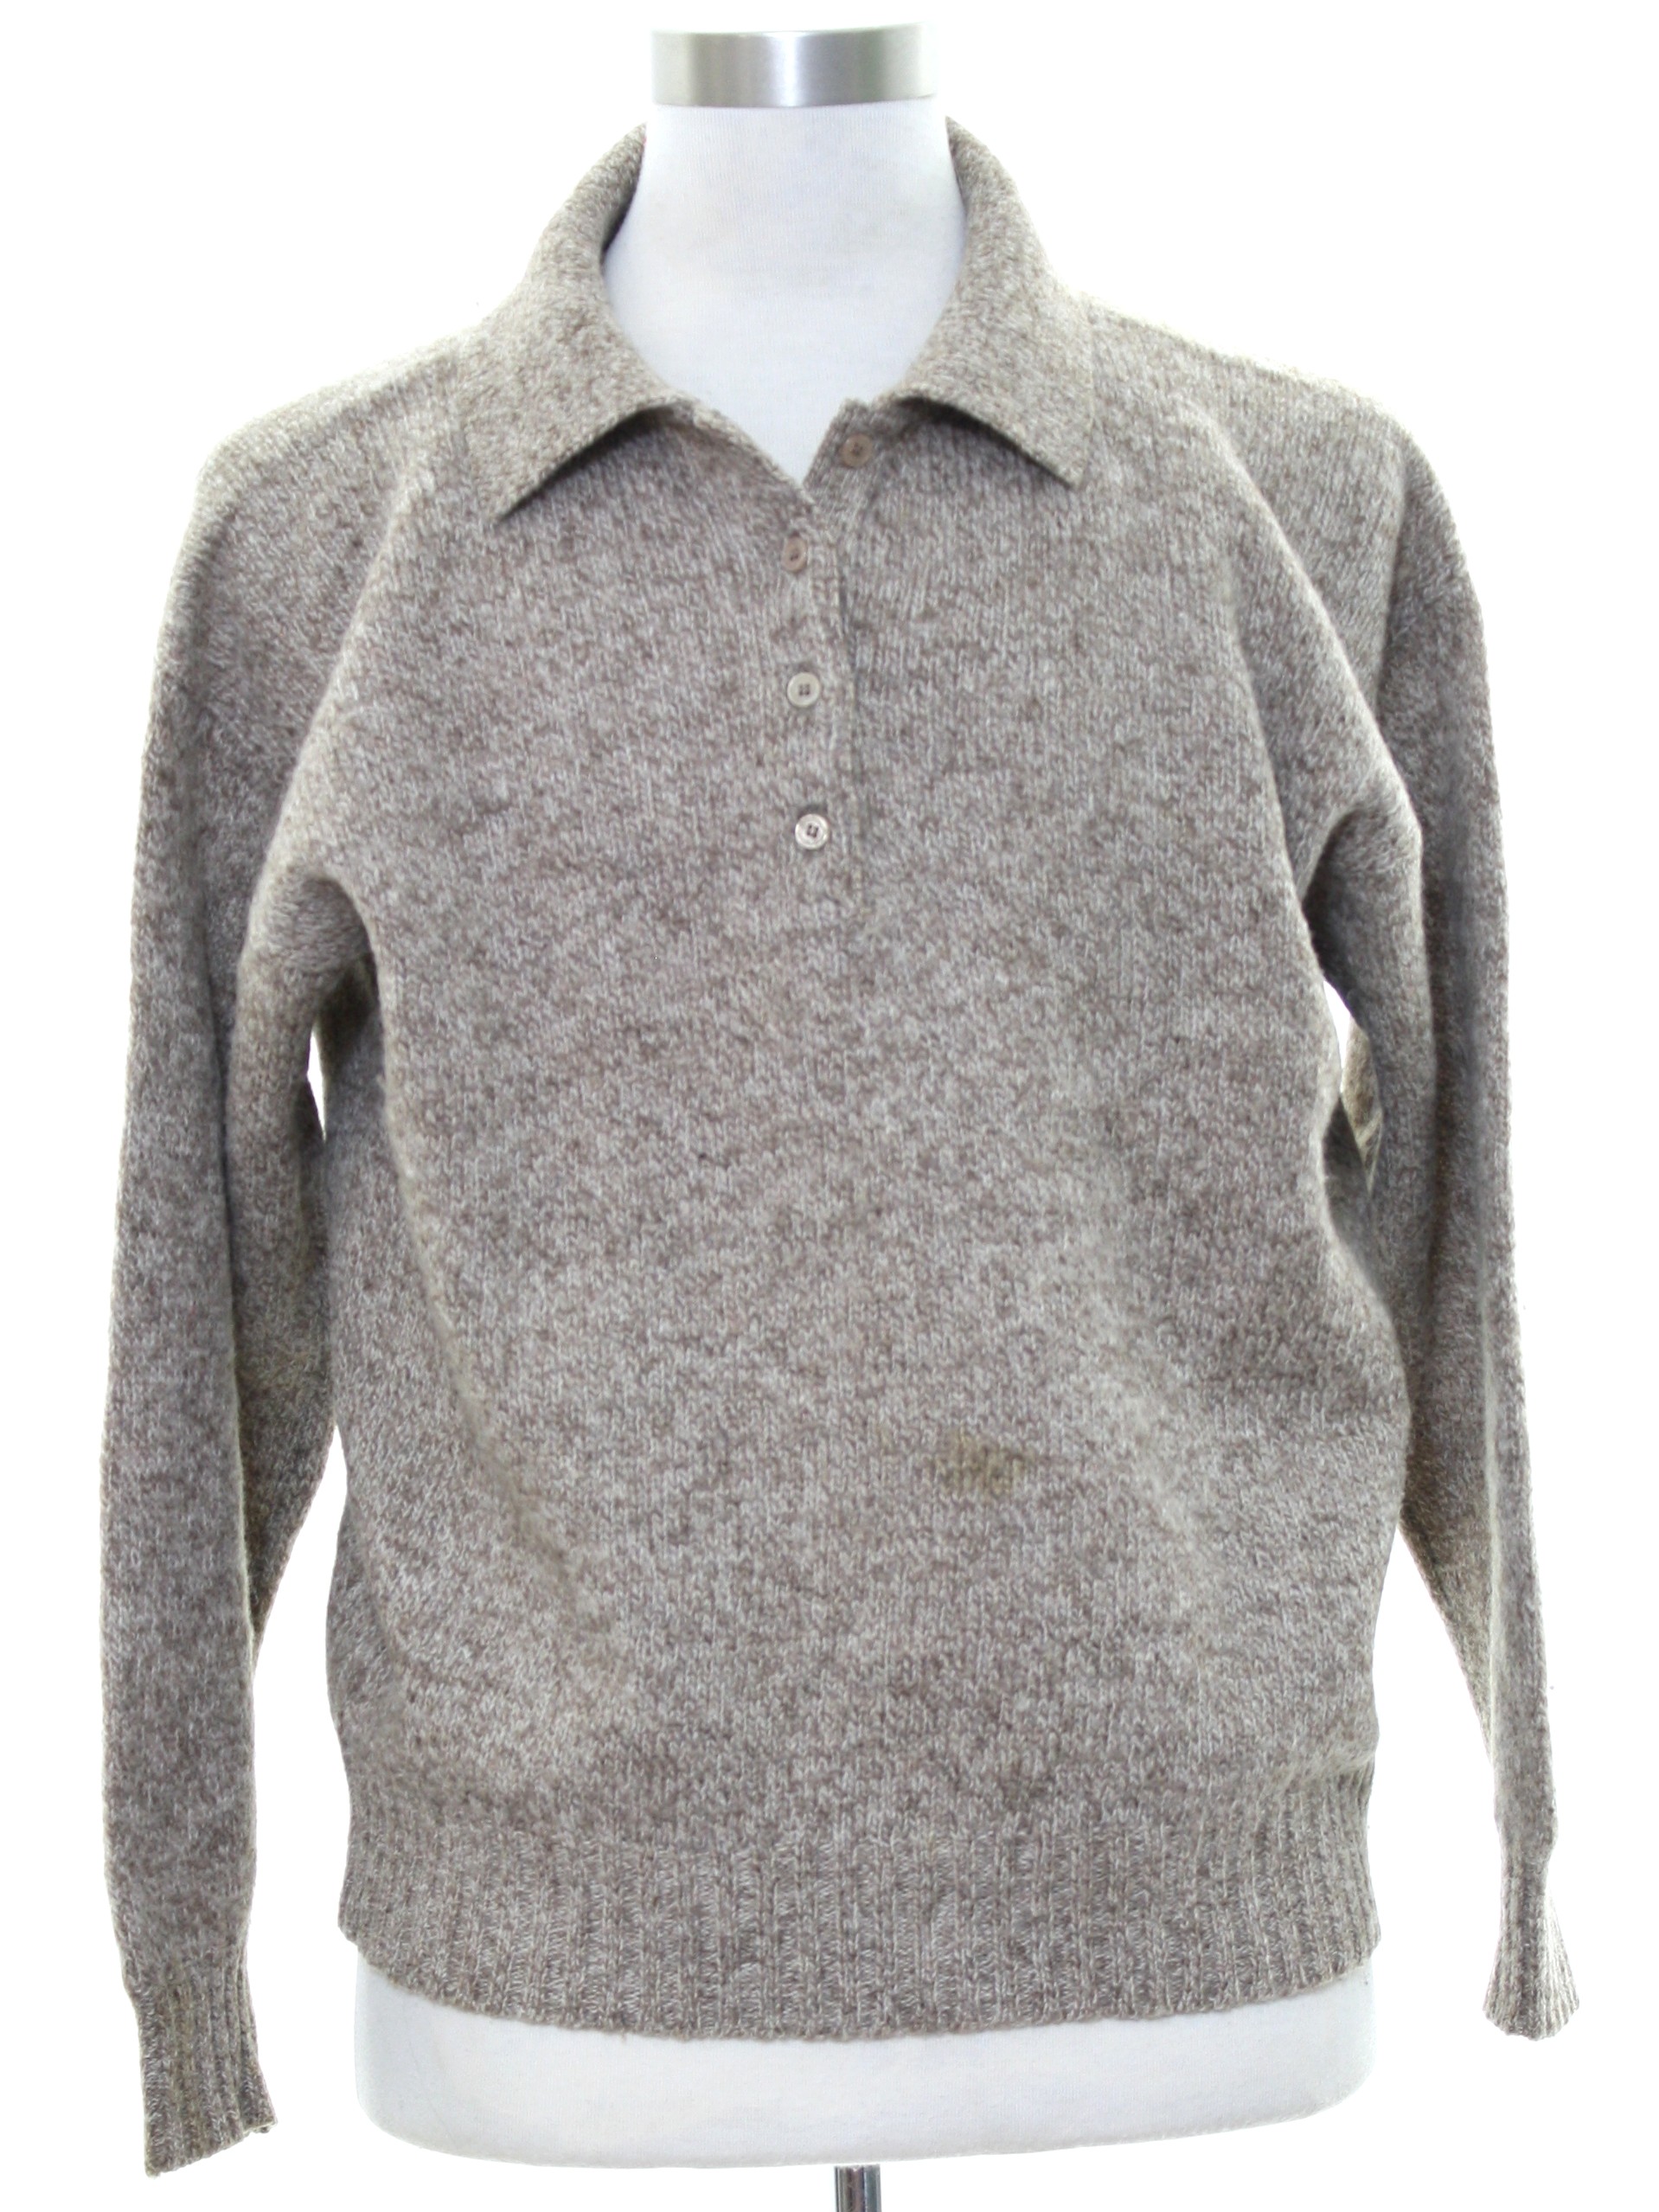 Retro 1980's Sweater (Mc George) : Late 80s -Mc George- Mens heathered ...